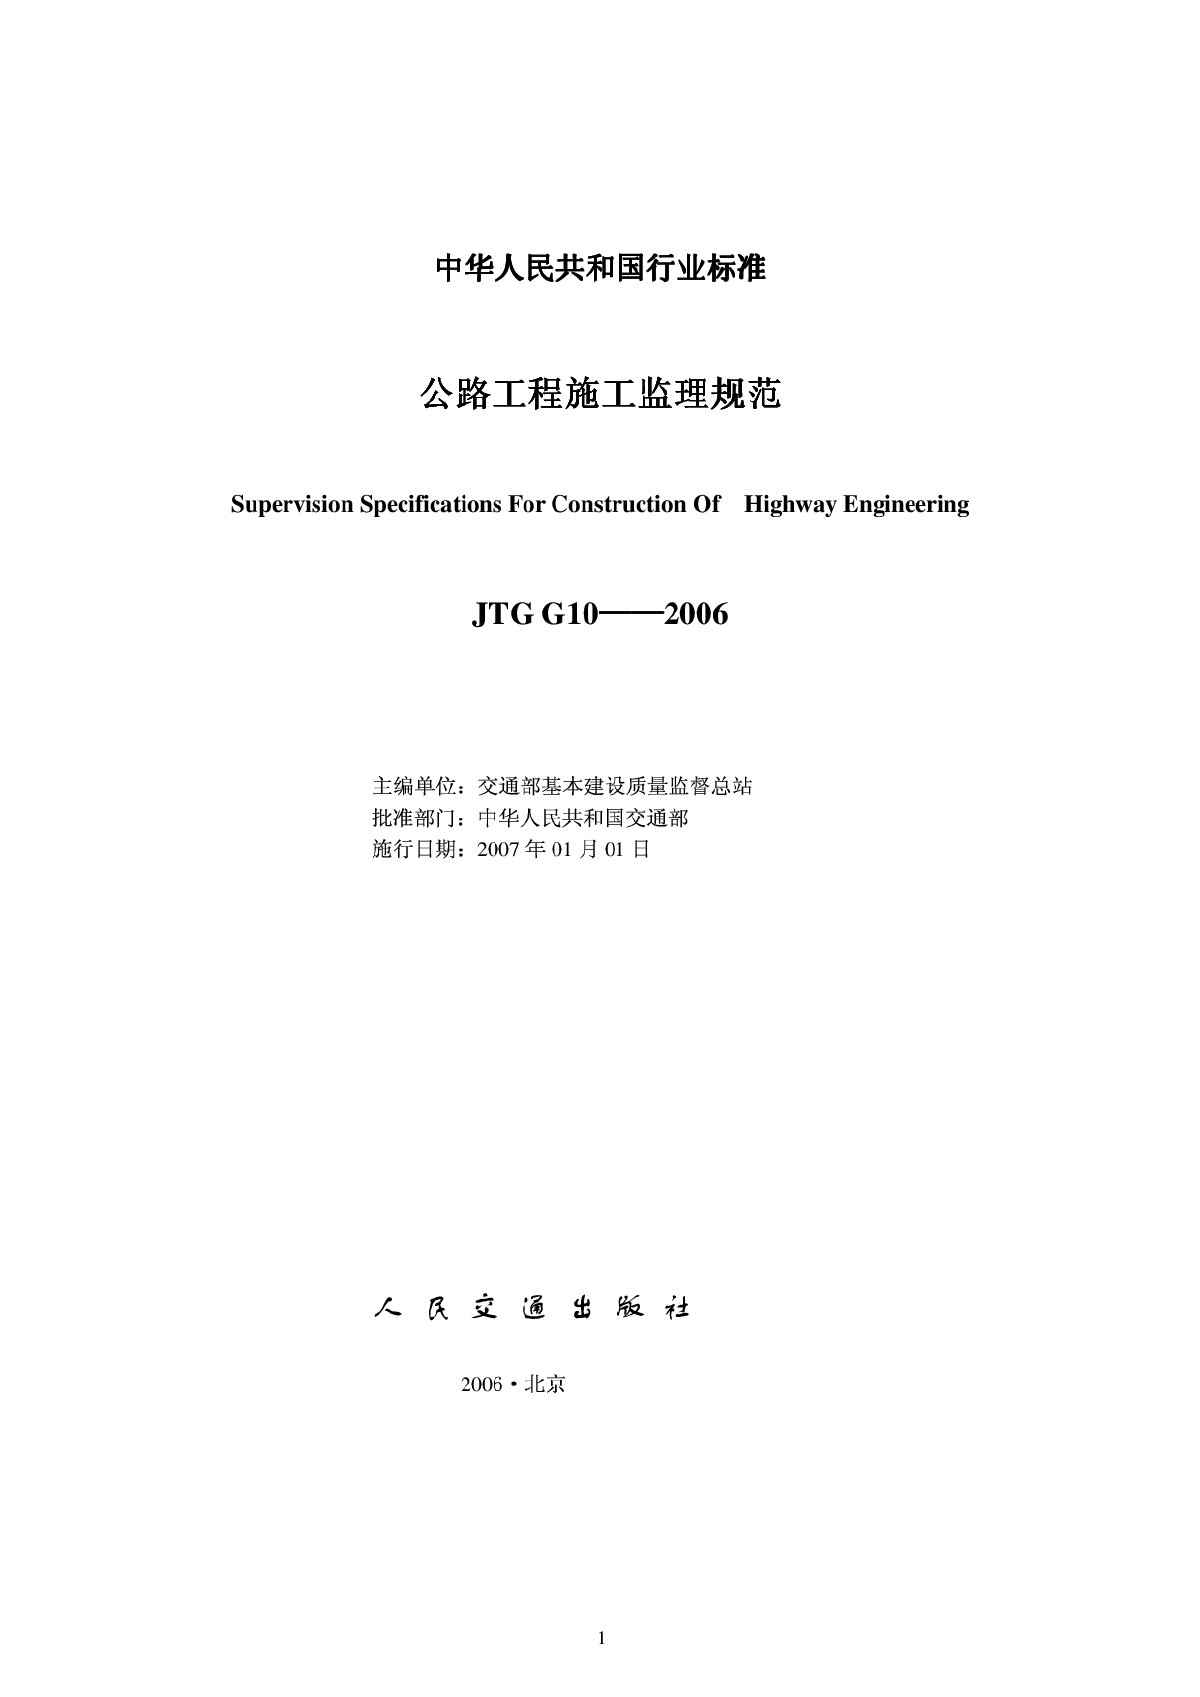 JTG G10-2006 公路工程施工监理规范(2016-10-01作废)-图二